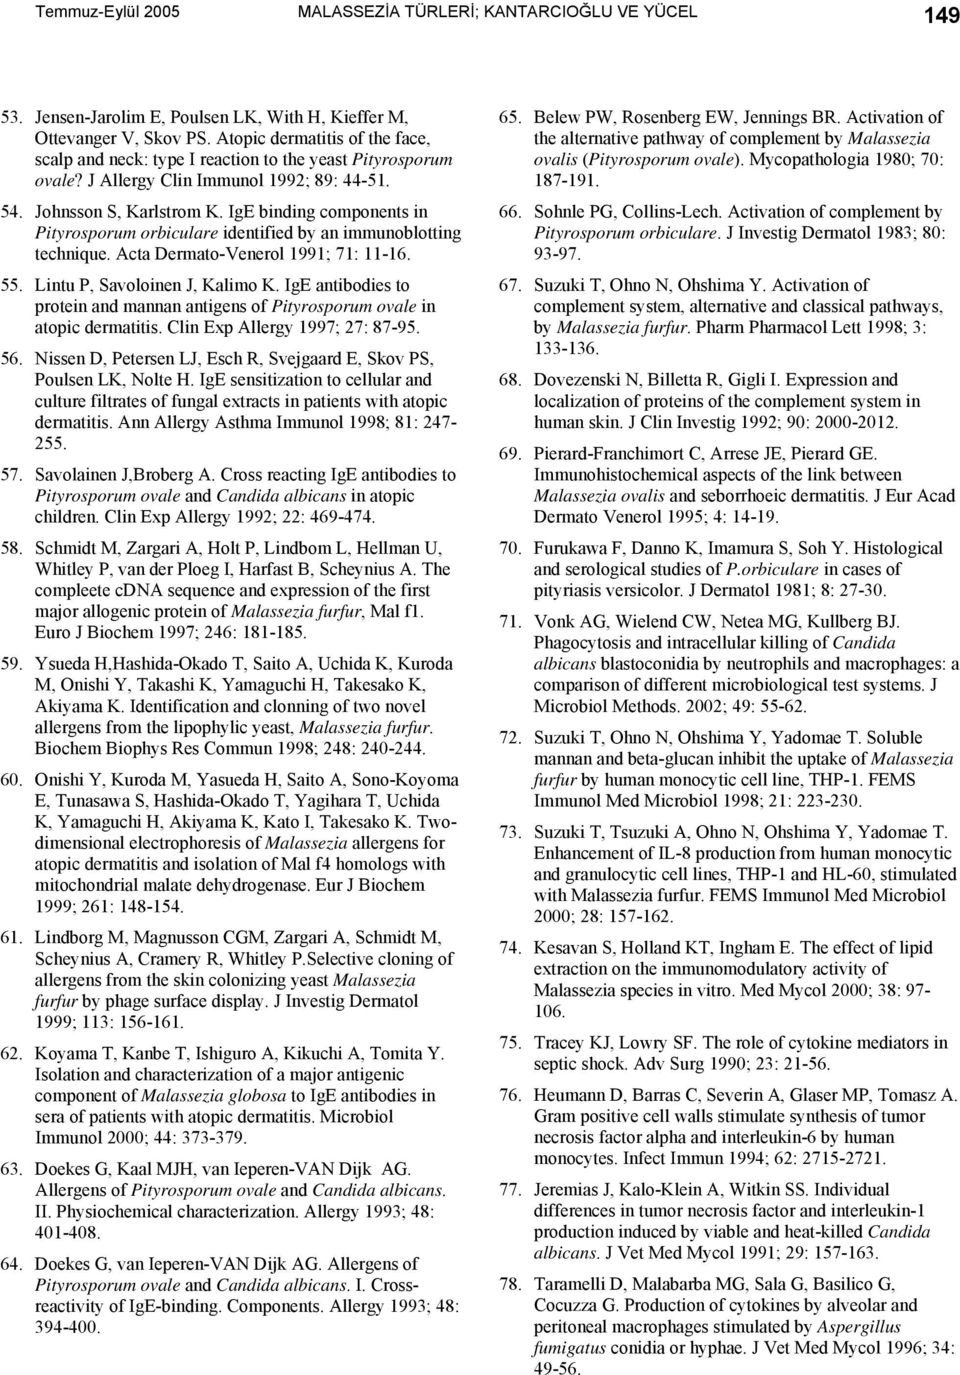 IgE binding components in Pityrosporum orbiculare identified by an immunoblotting technique. Acta Dermato-Venerol 1991; 71: 11-16. 55. Lintu P, Savoloinen J, Kalimo K.